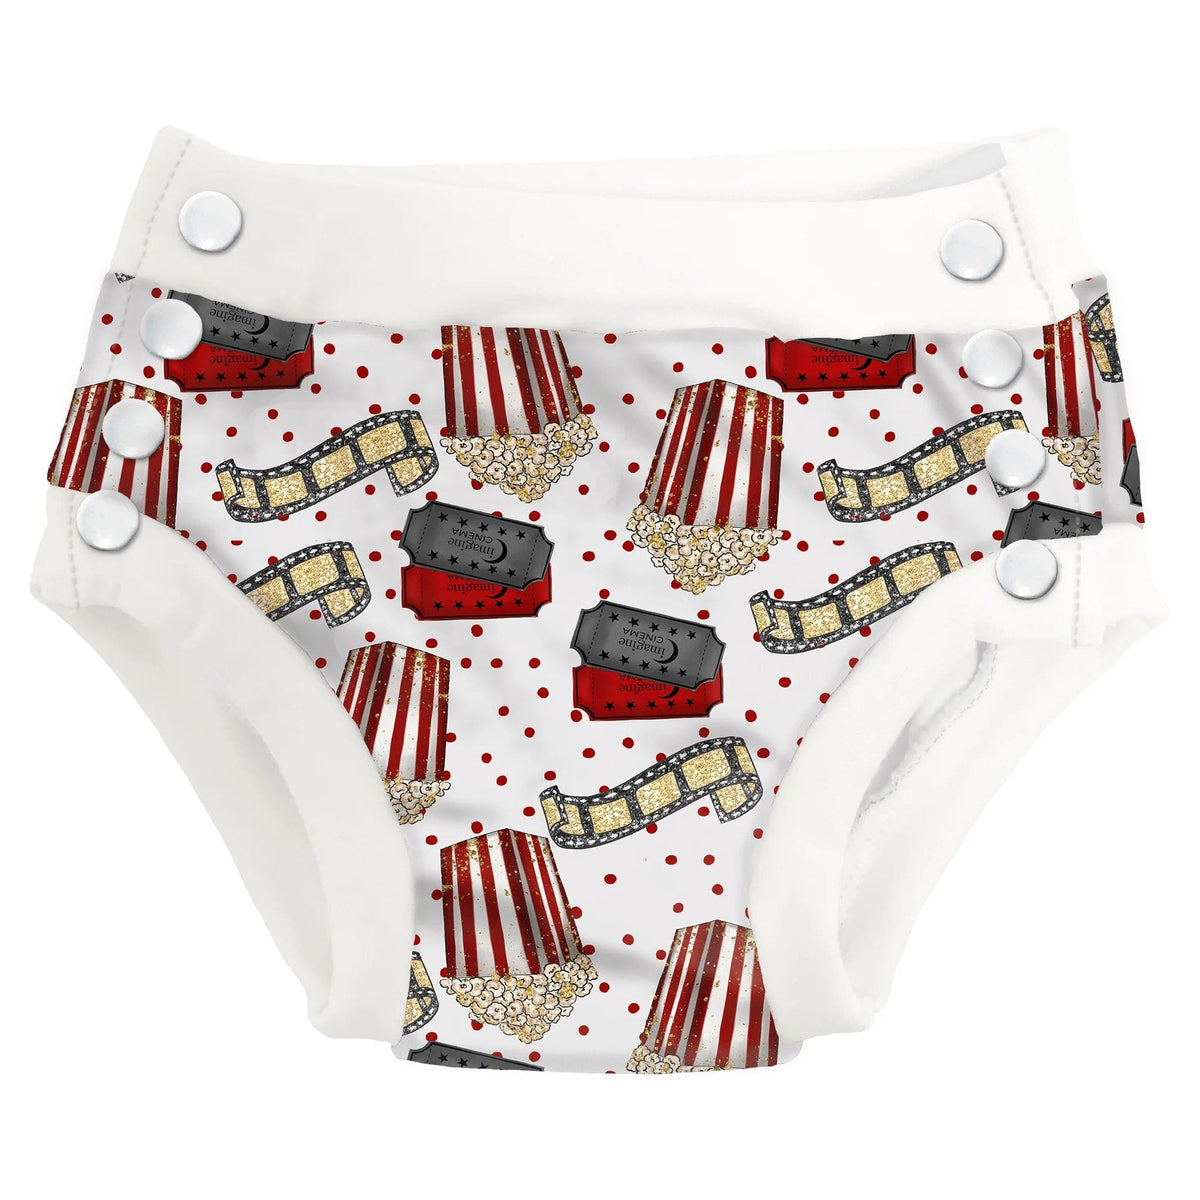 Cotton Baby Potty Training Pants Underwear for Girls UK